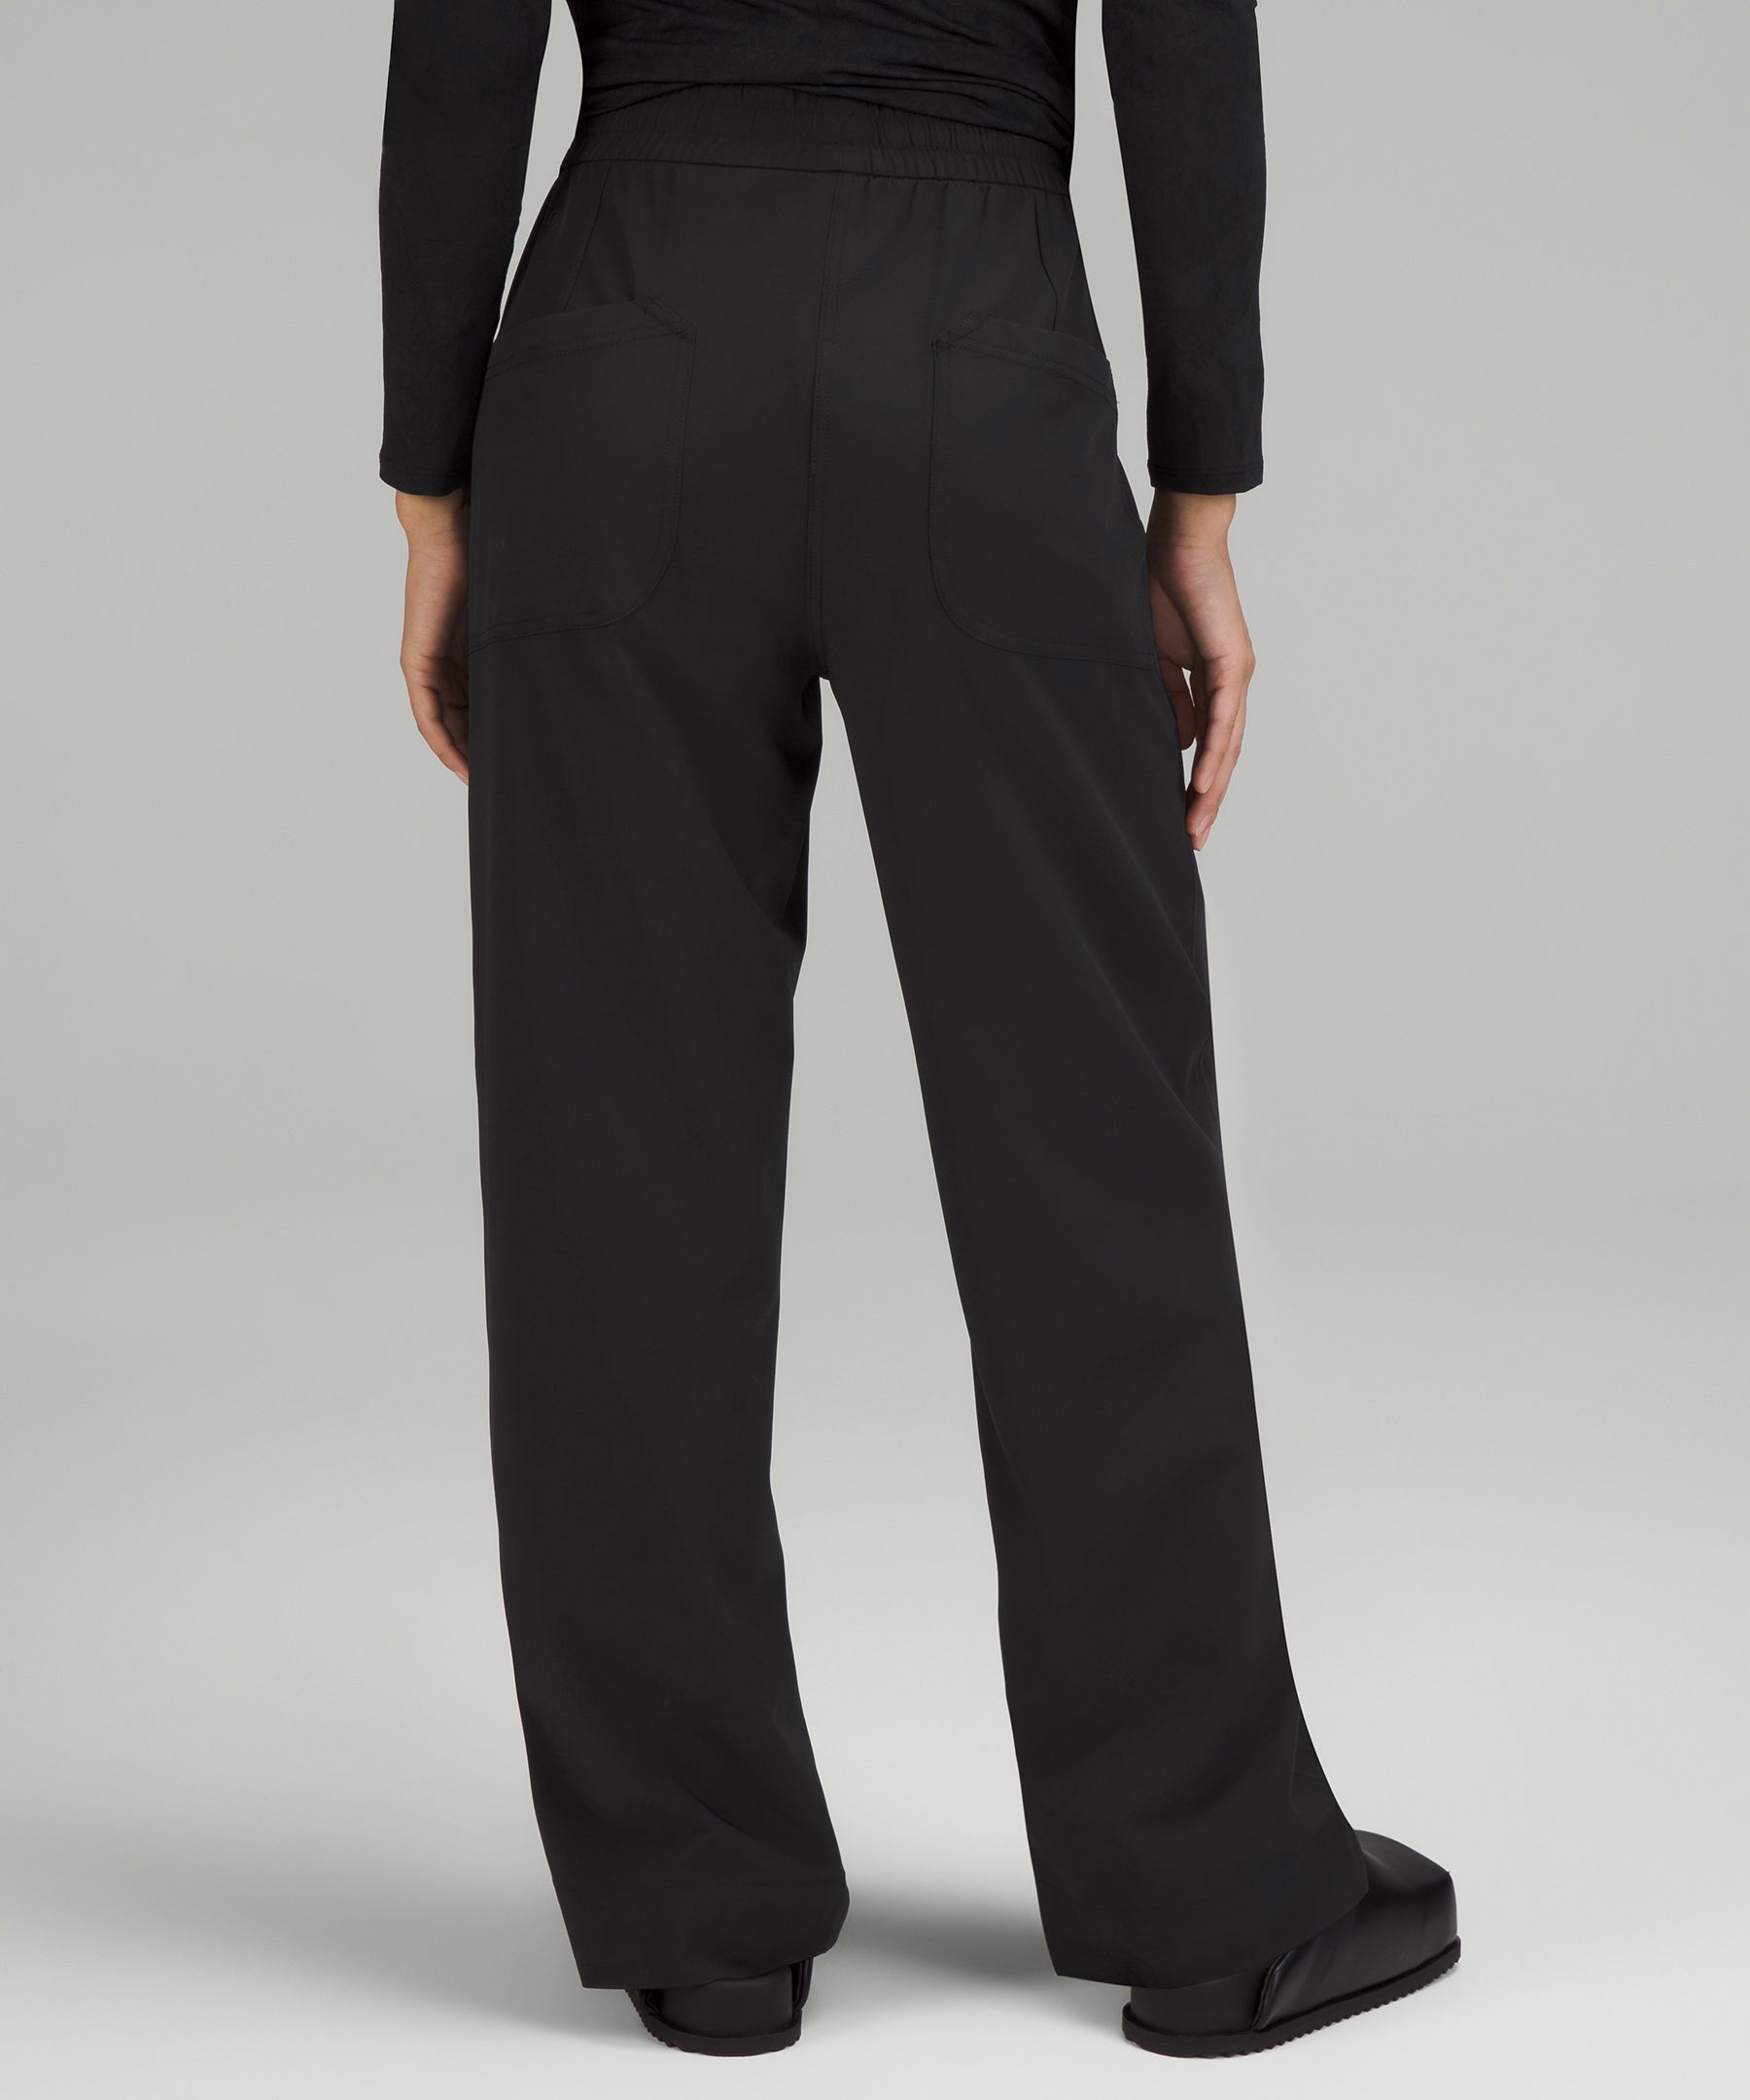 Women's Woven Train Mid-Rise Pants 29 - C9 Champion® Black XL